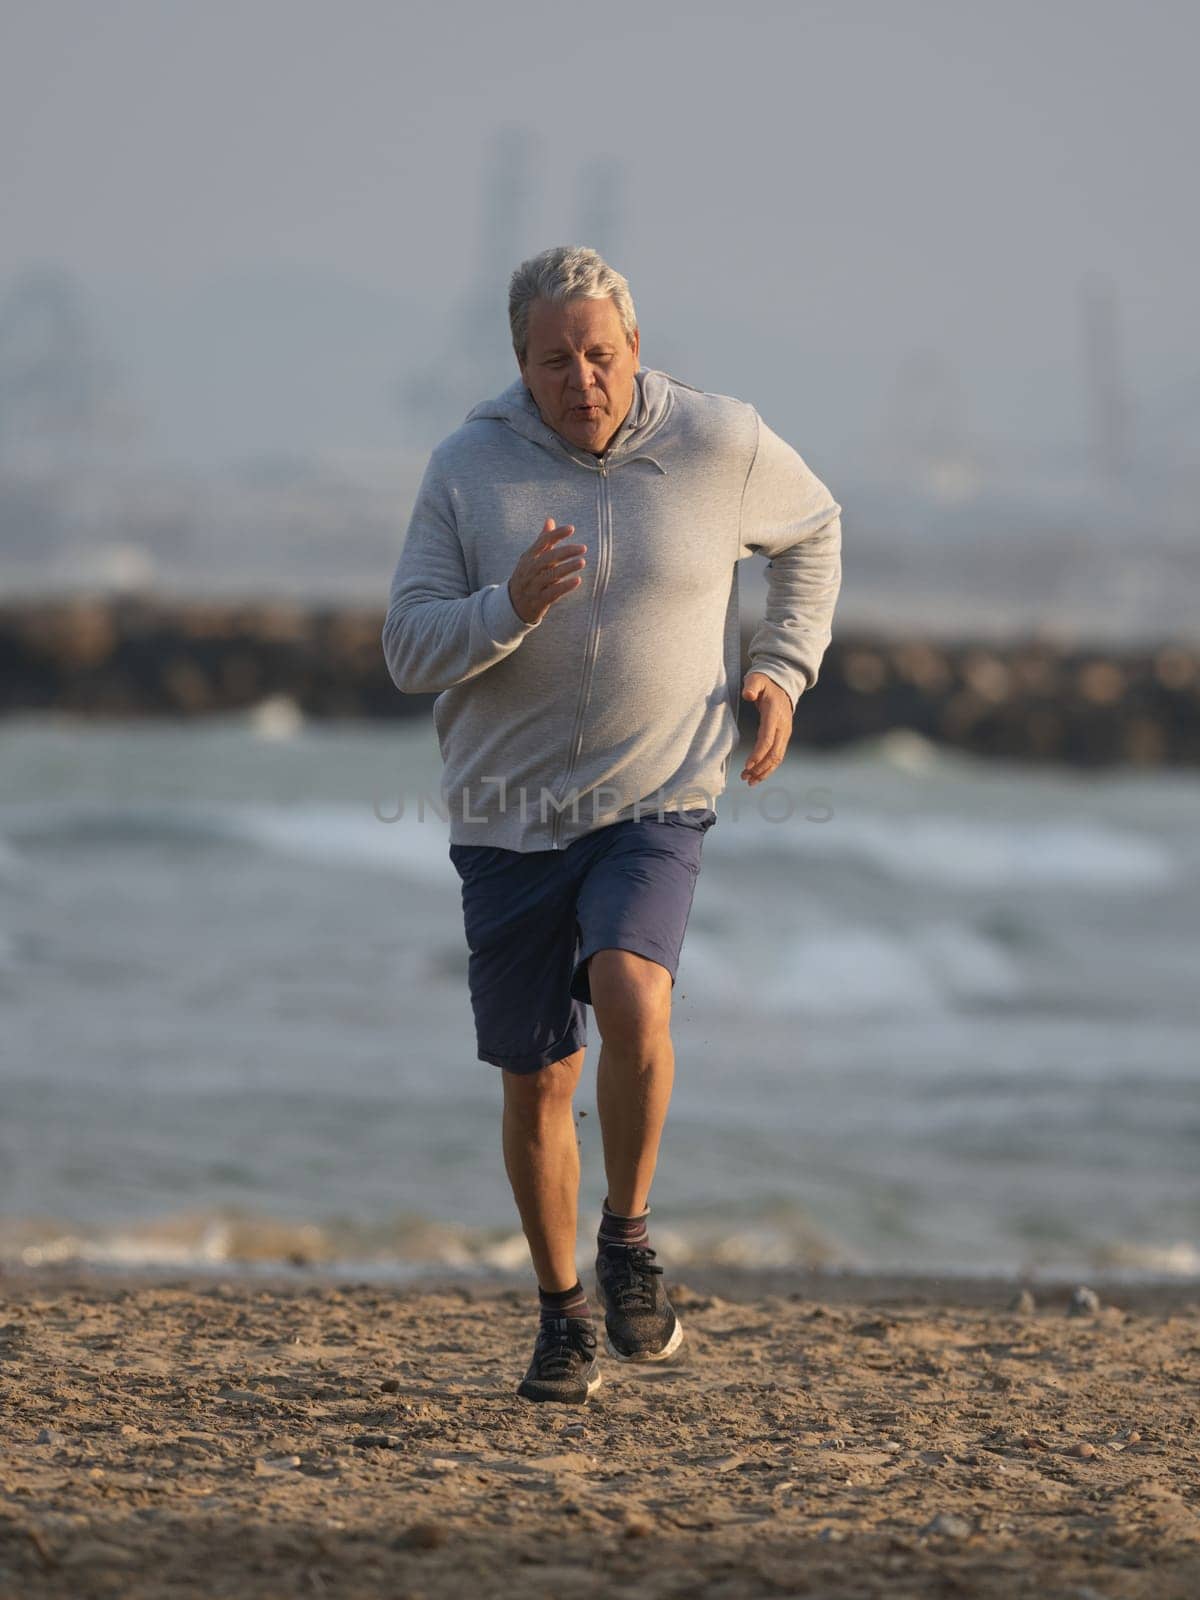 An elderly man is running by gcm